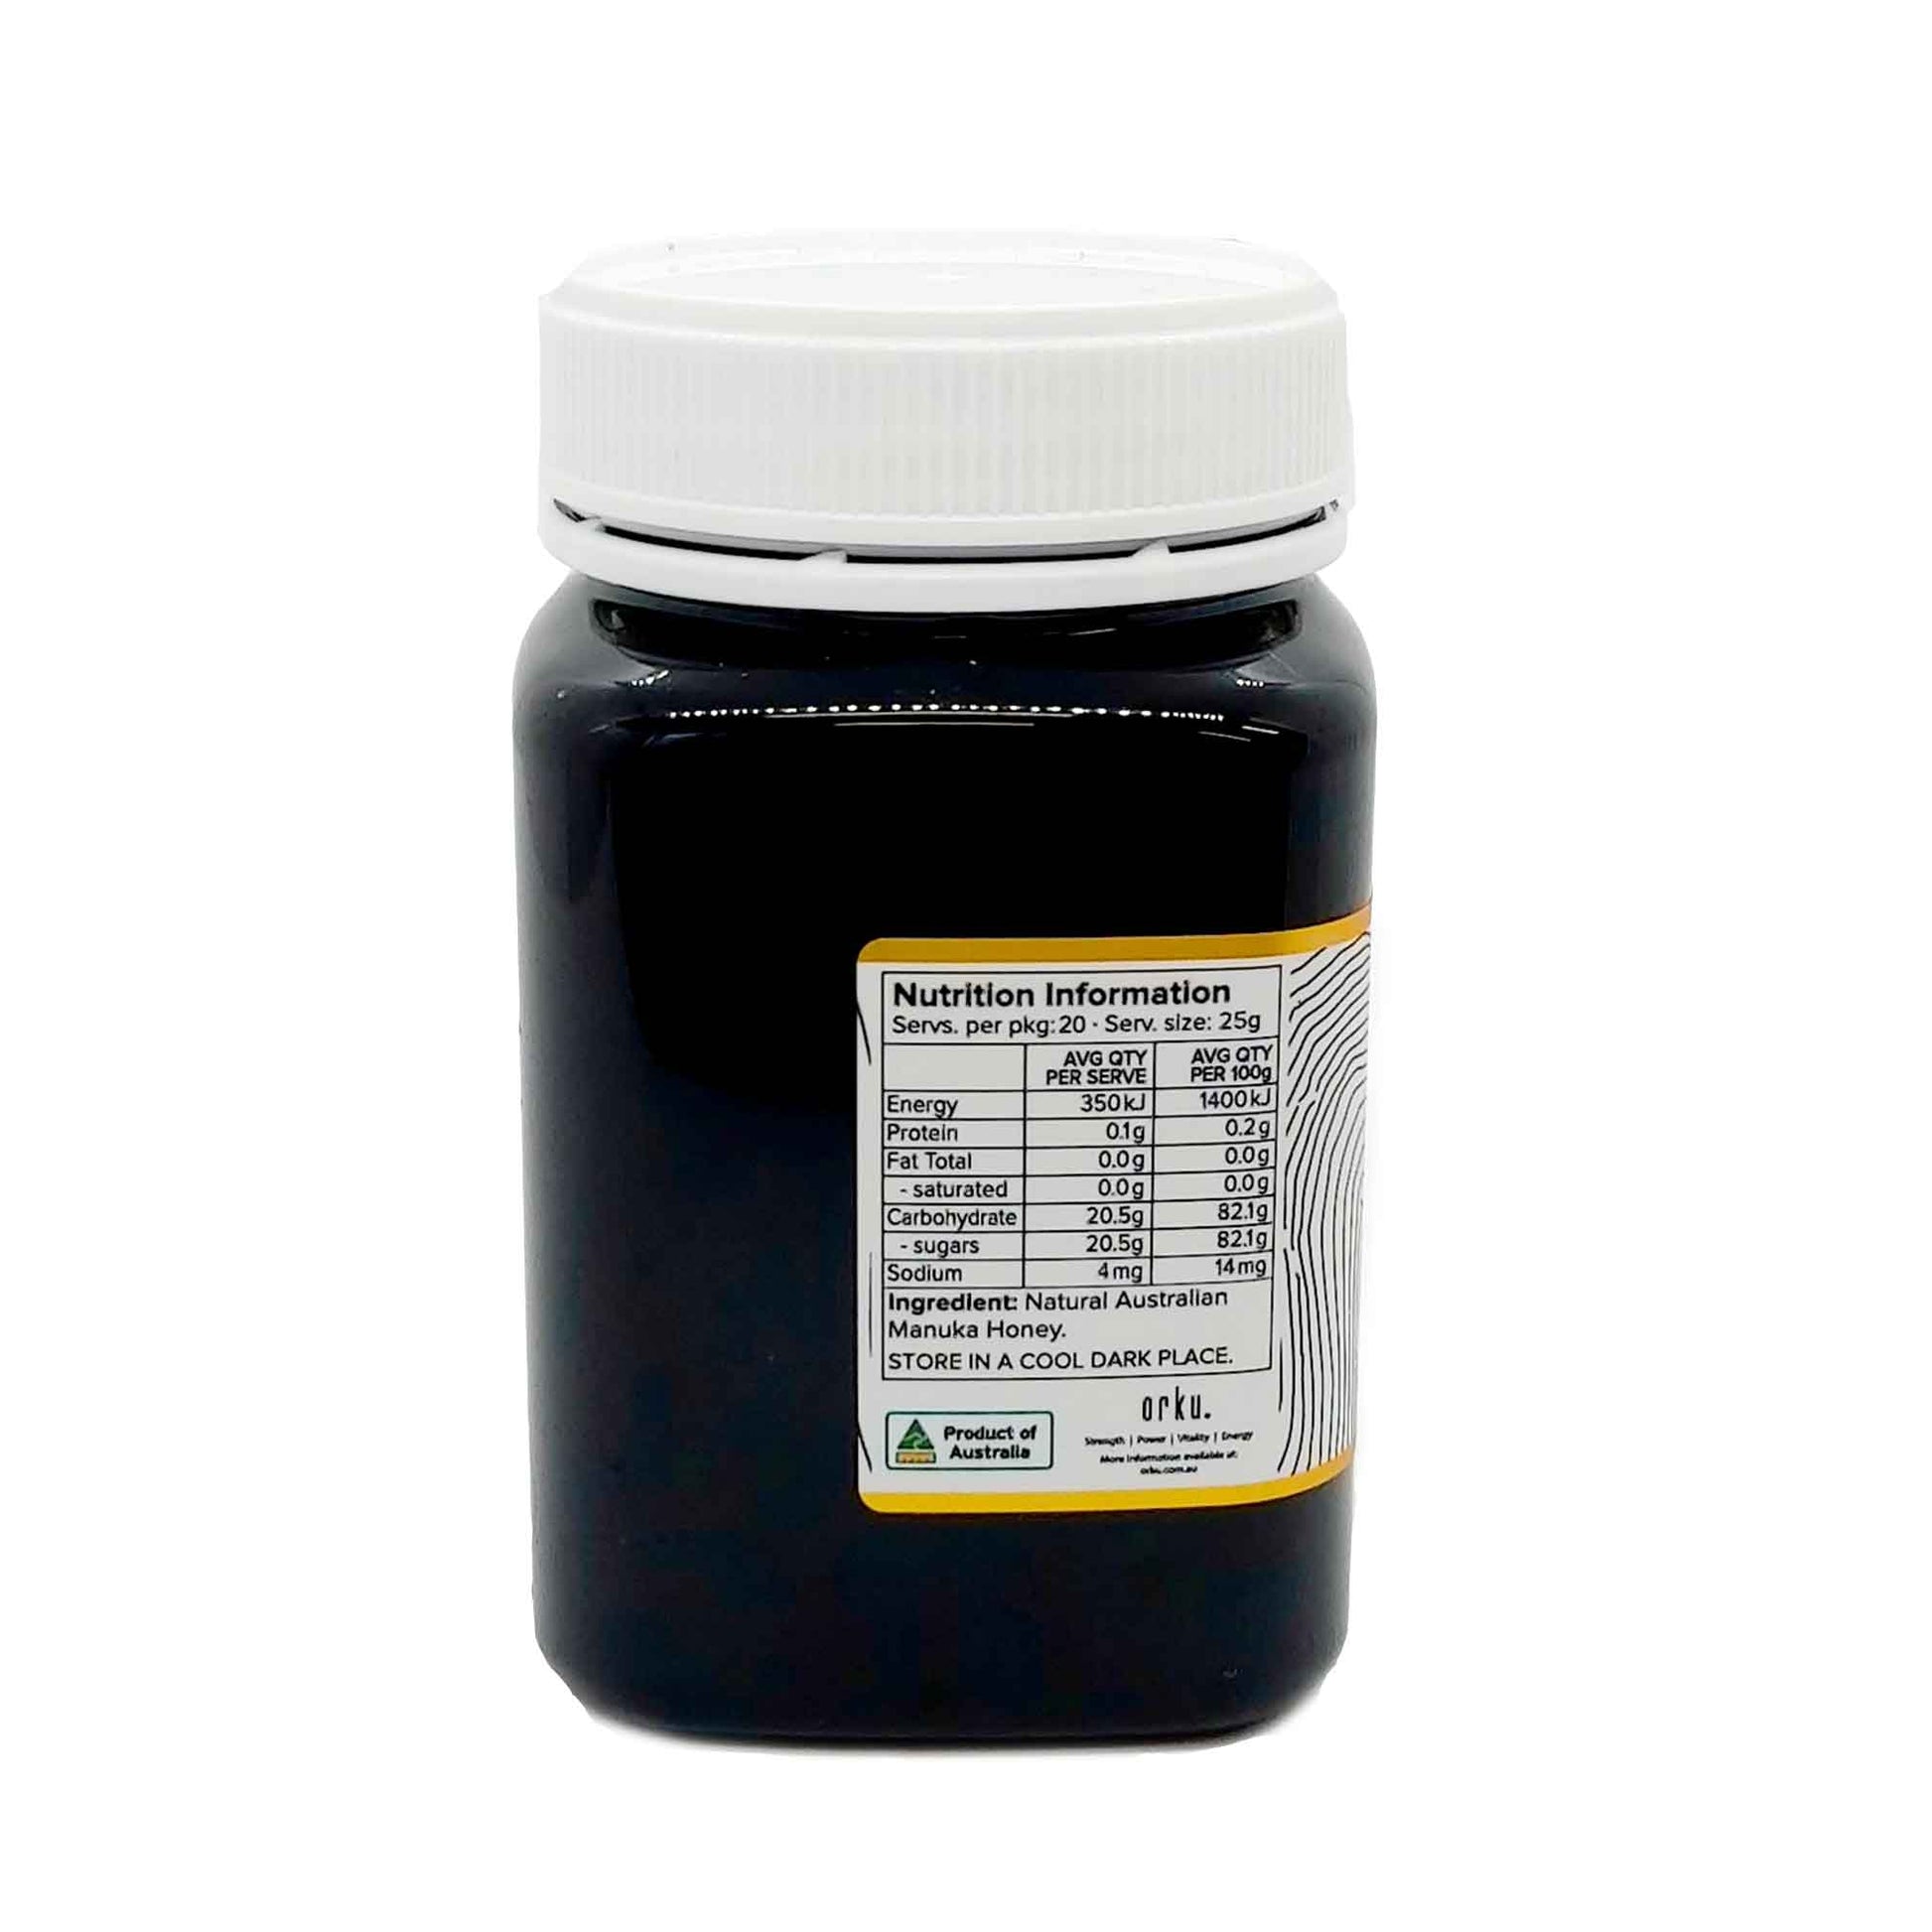 500g MGO 500+ Australian Manuka Honey - 100% Raw Natural Pure Jelly Bush